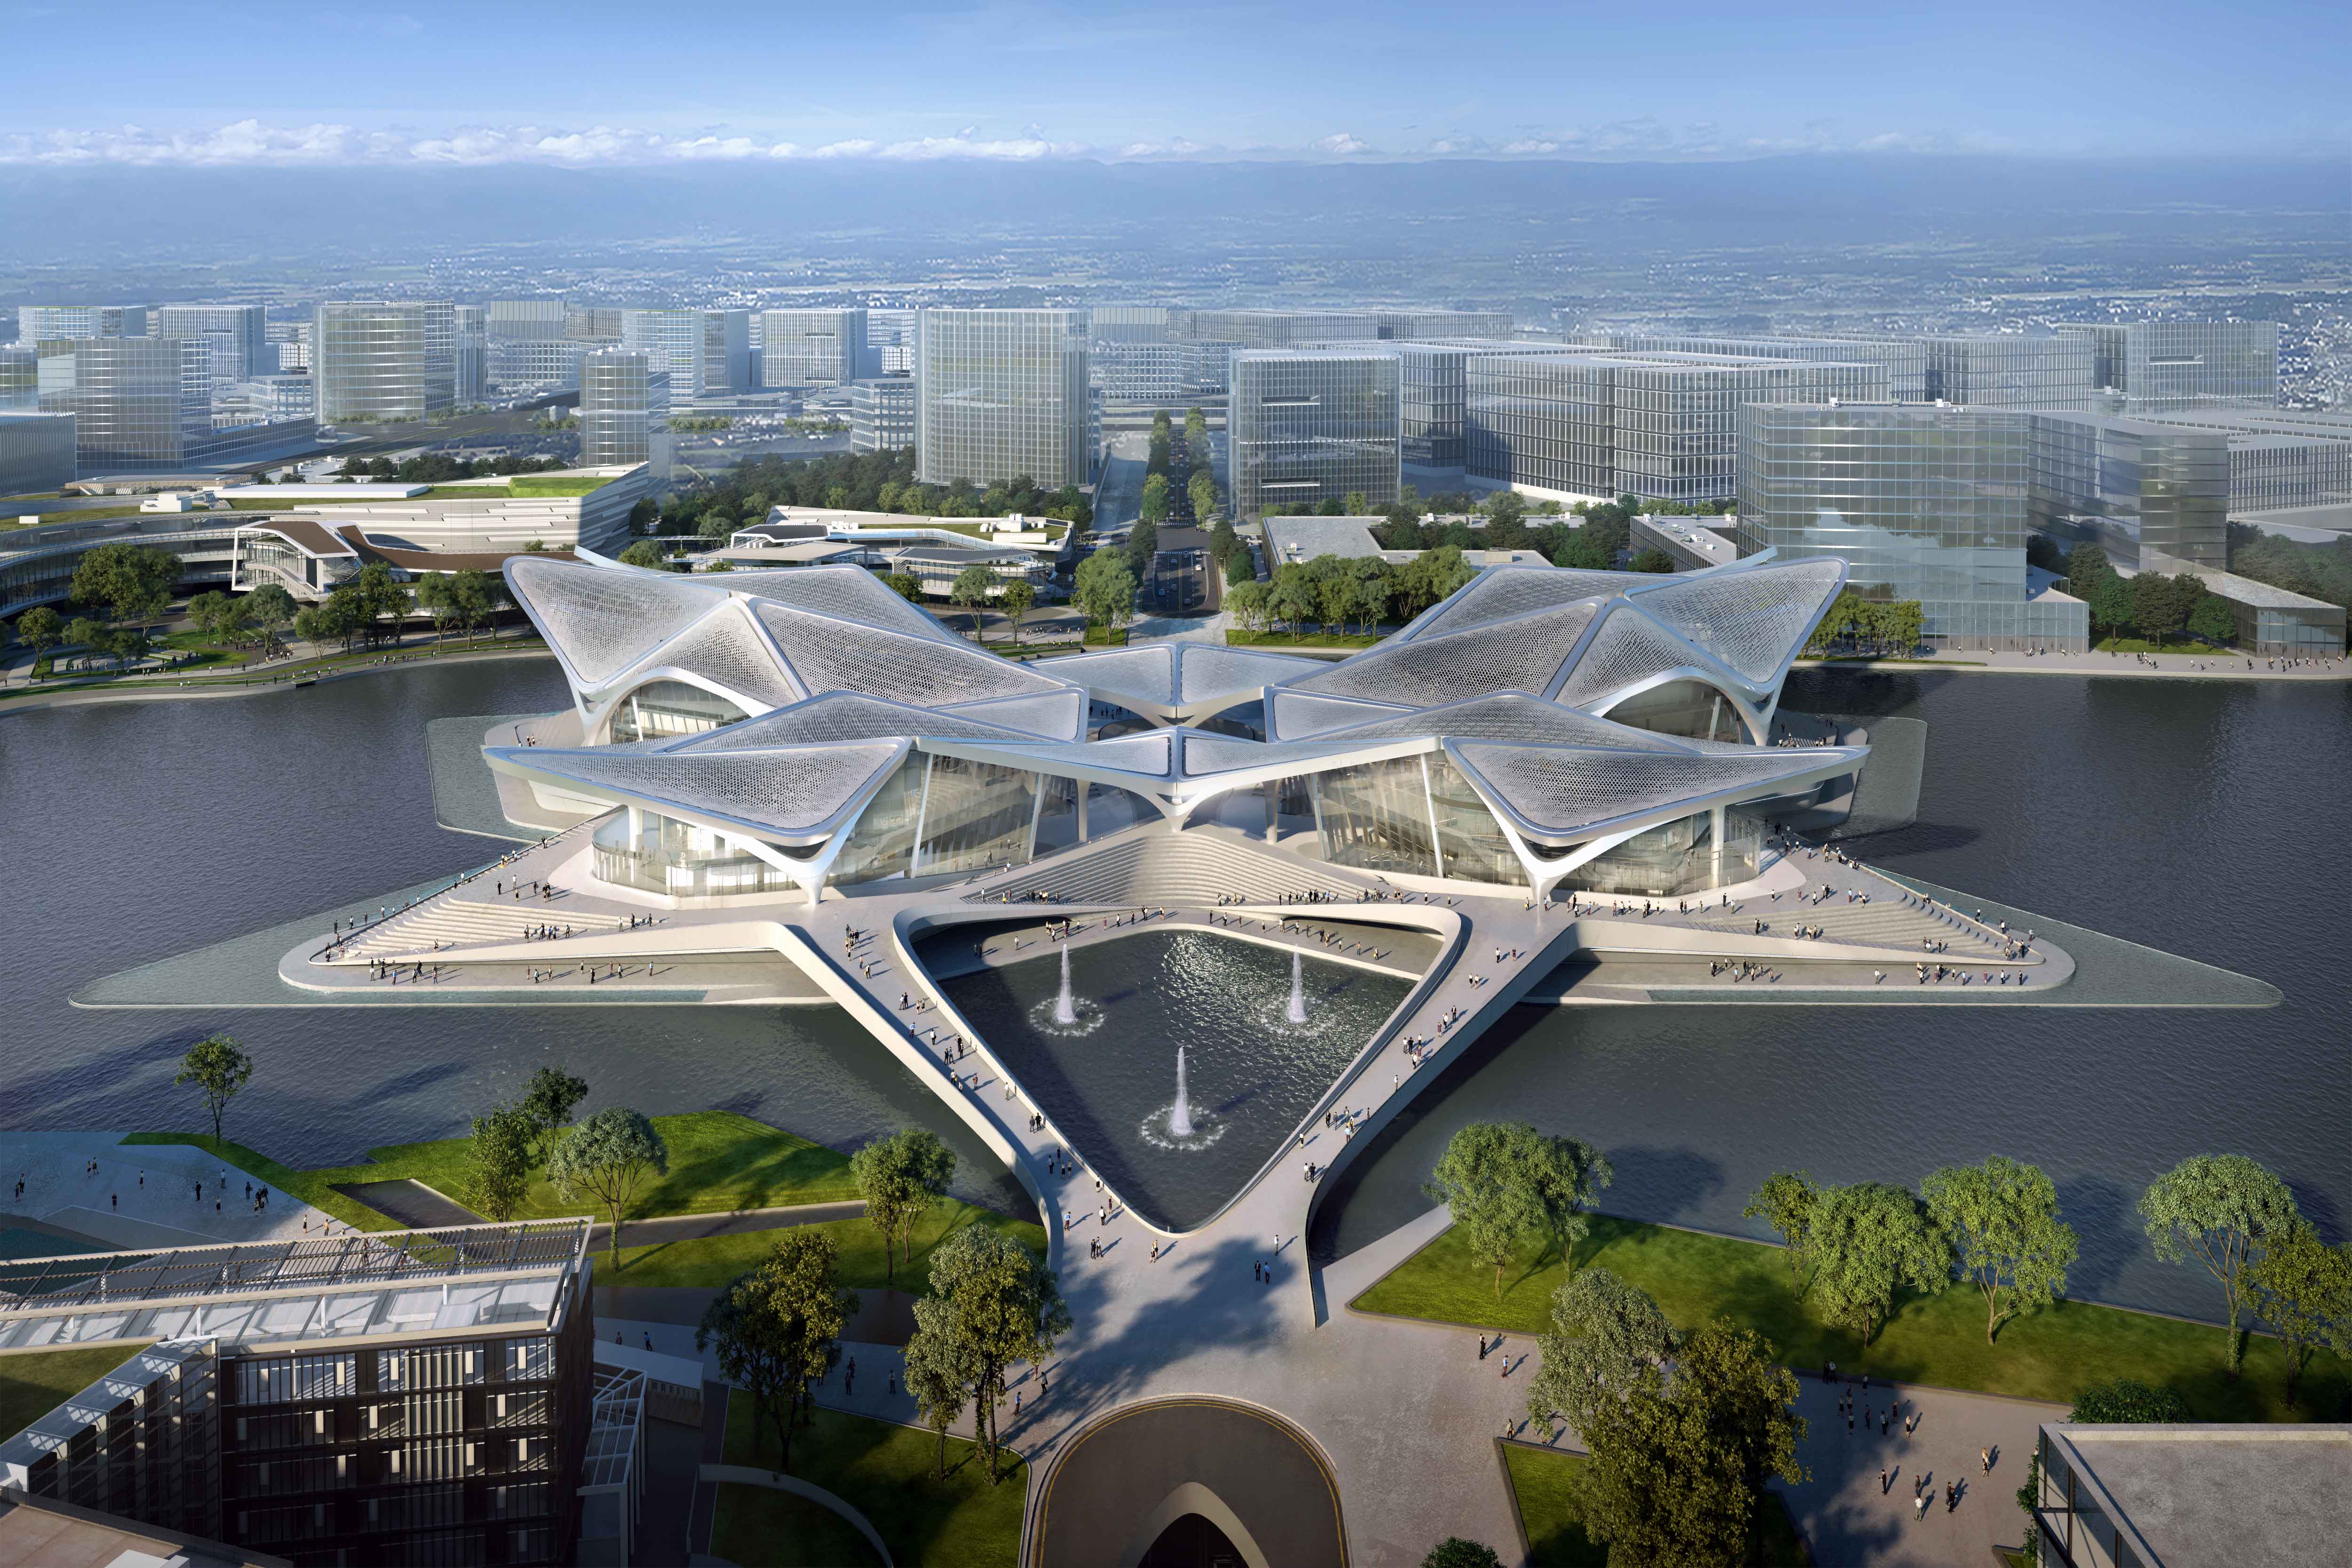 Zhuhai Jinwan Civic Art Center, a future architecture to exhibit Chinese arts